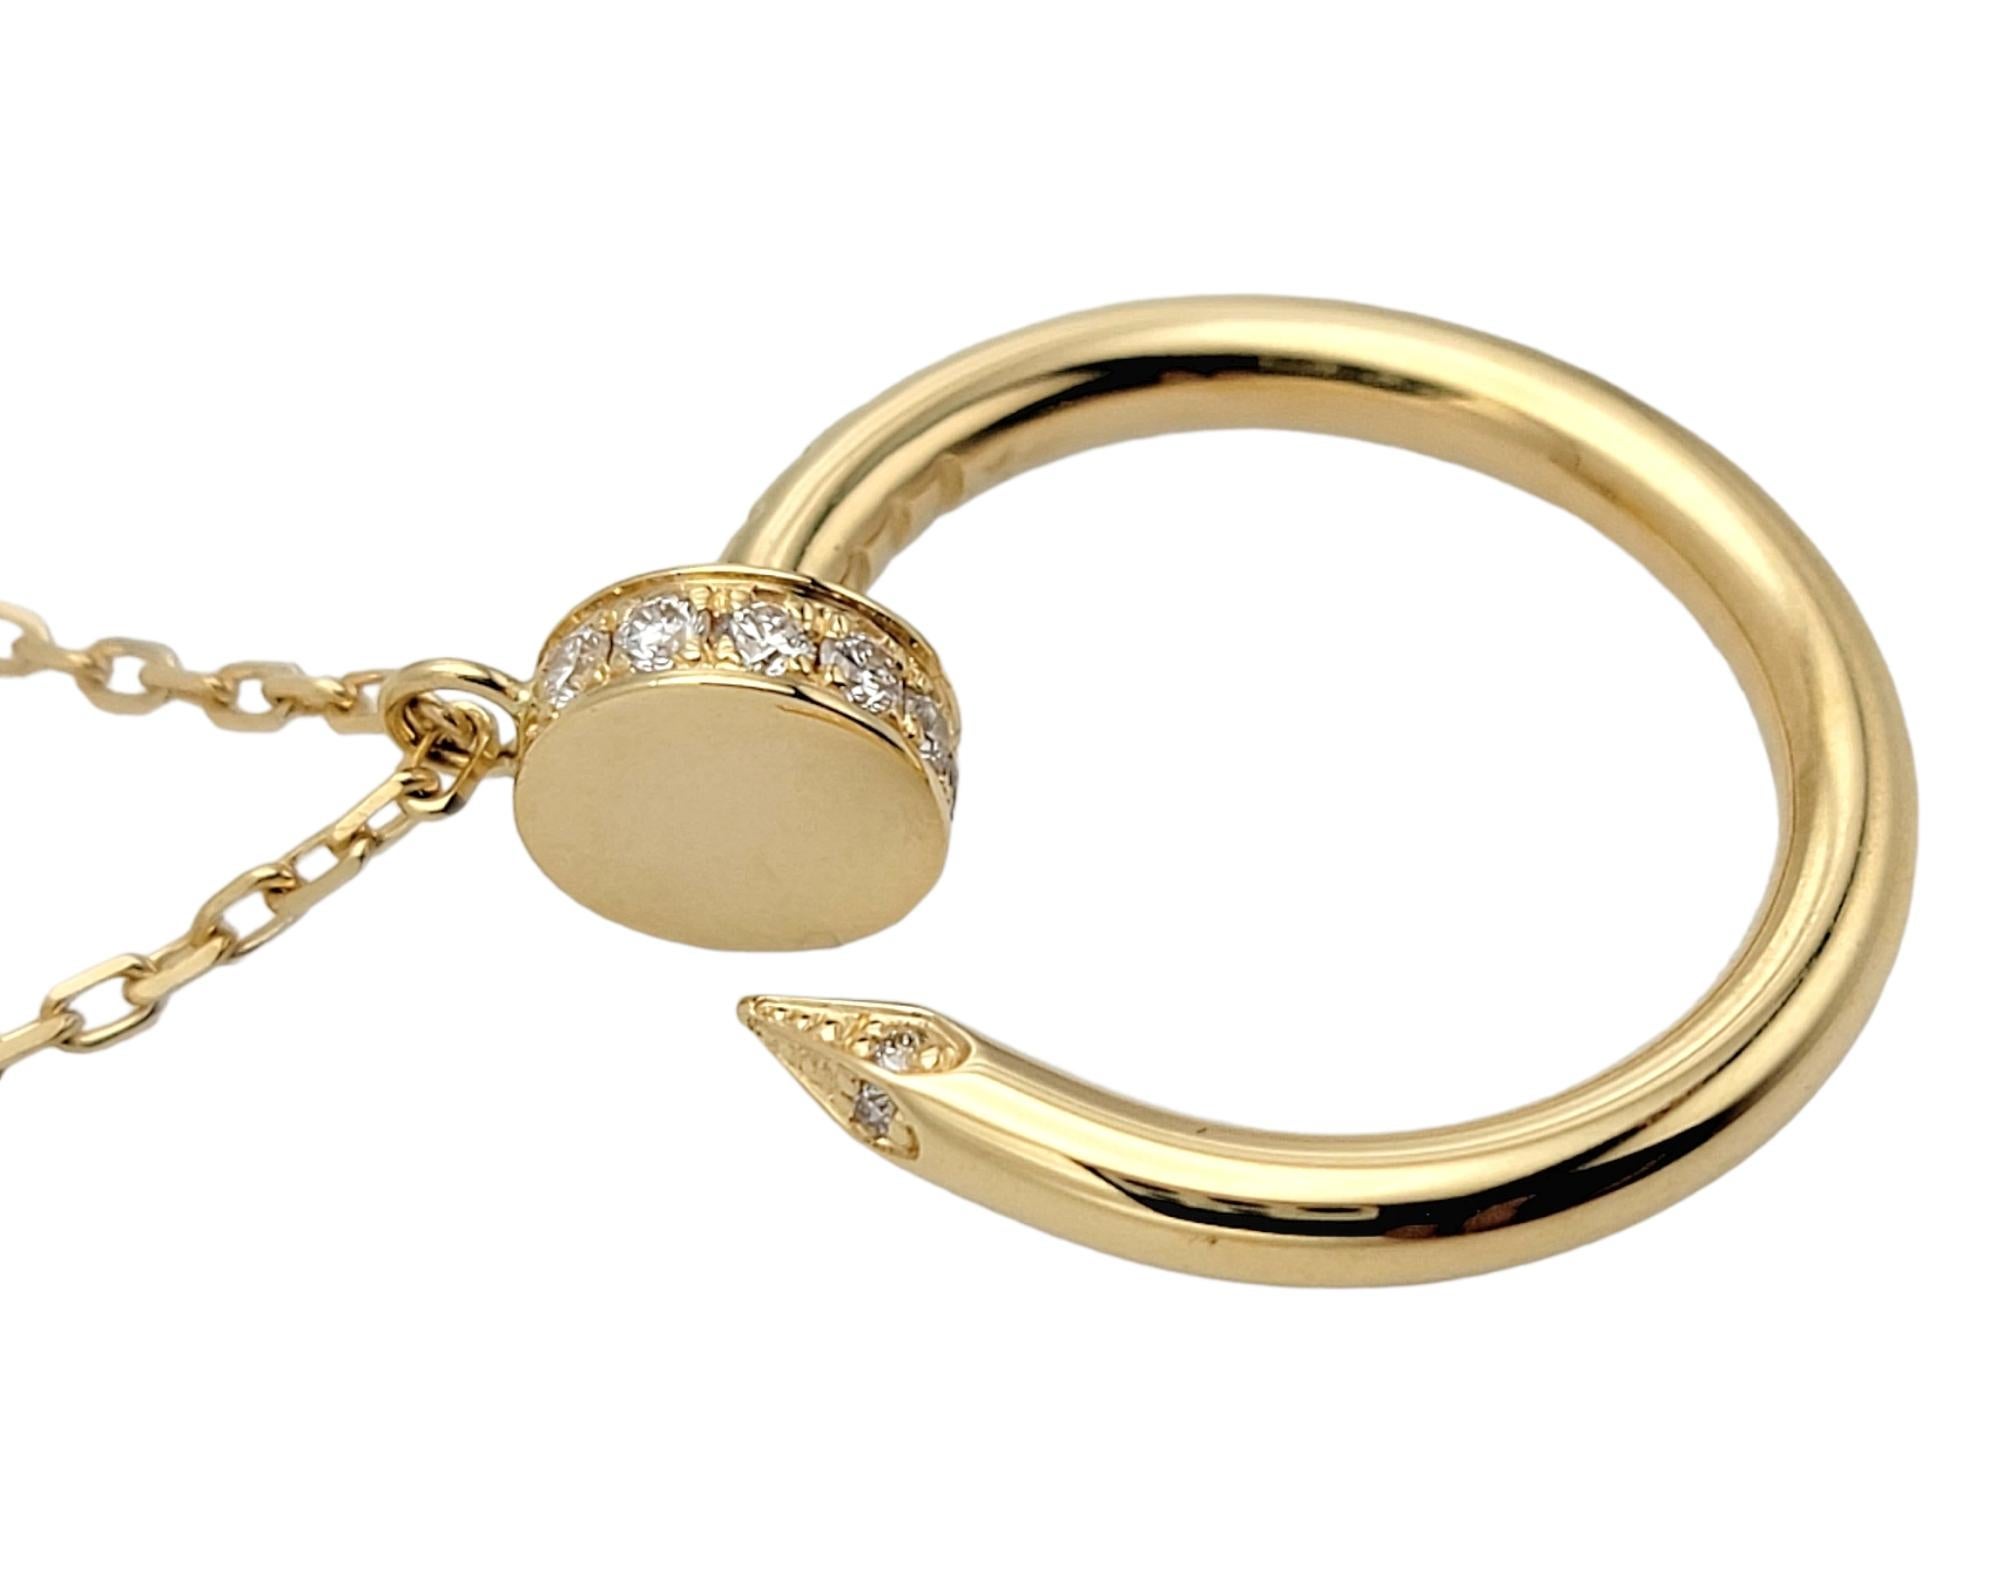 Contemporary Cartier Juste Un Clou 18 Karat Yellow Gold Pendant Necklace with Diamonds 14-16